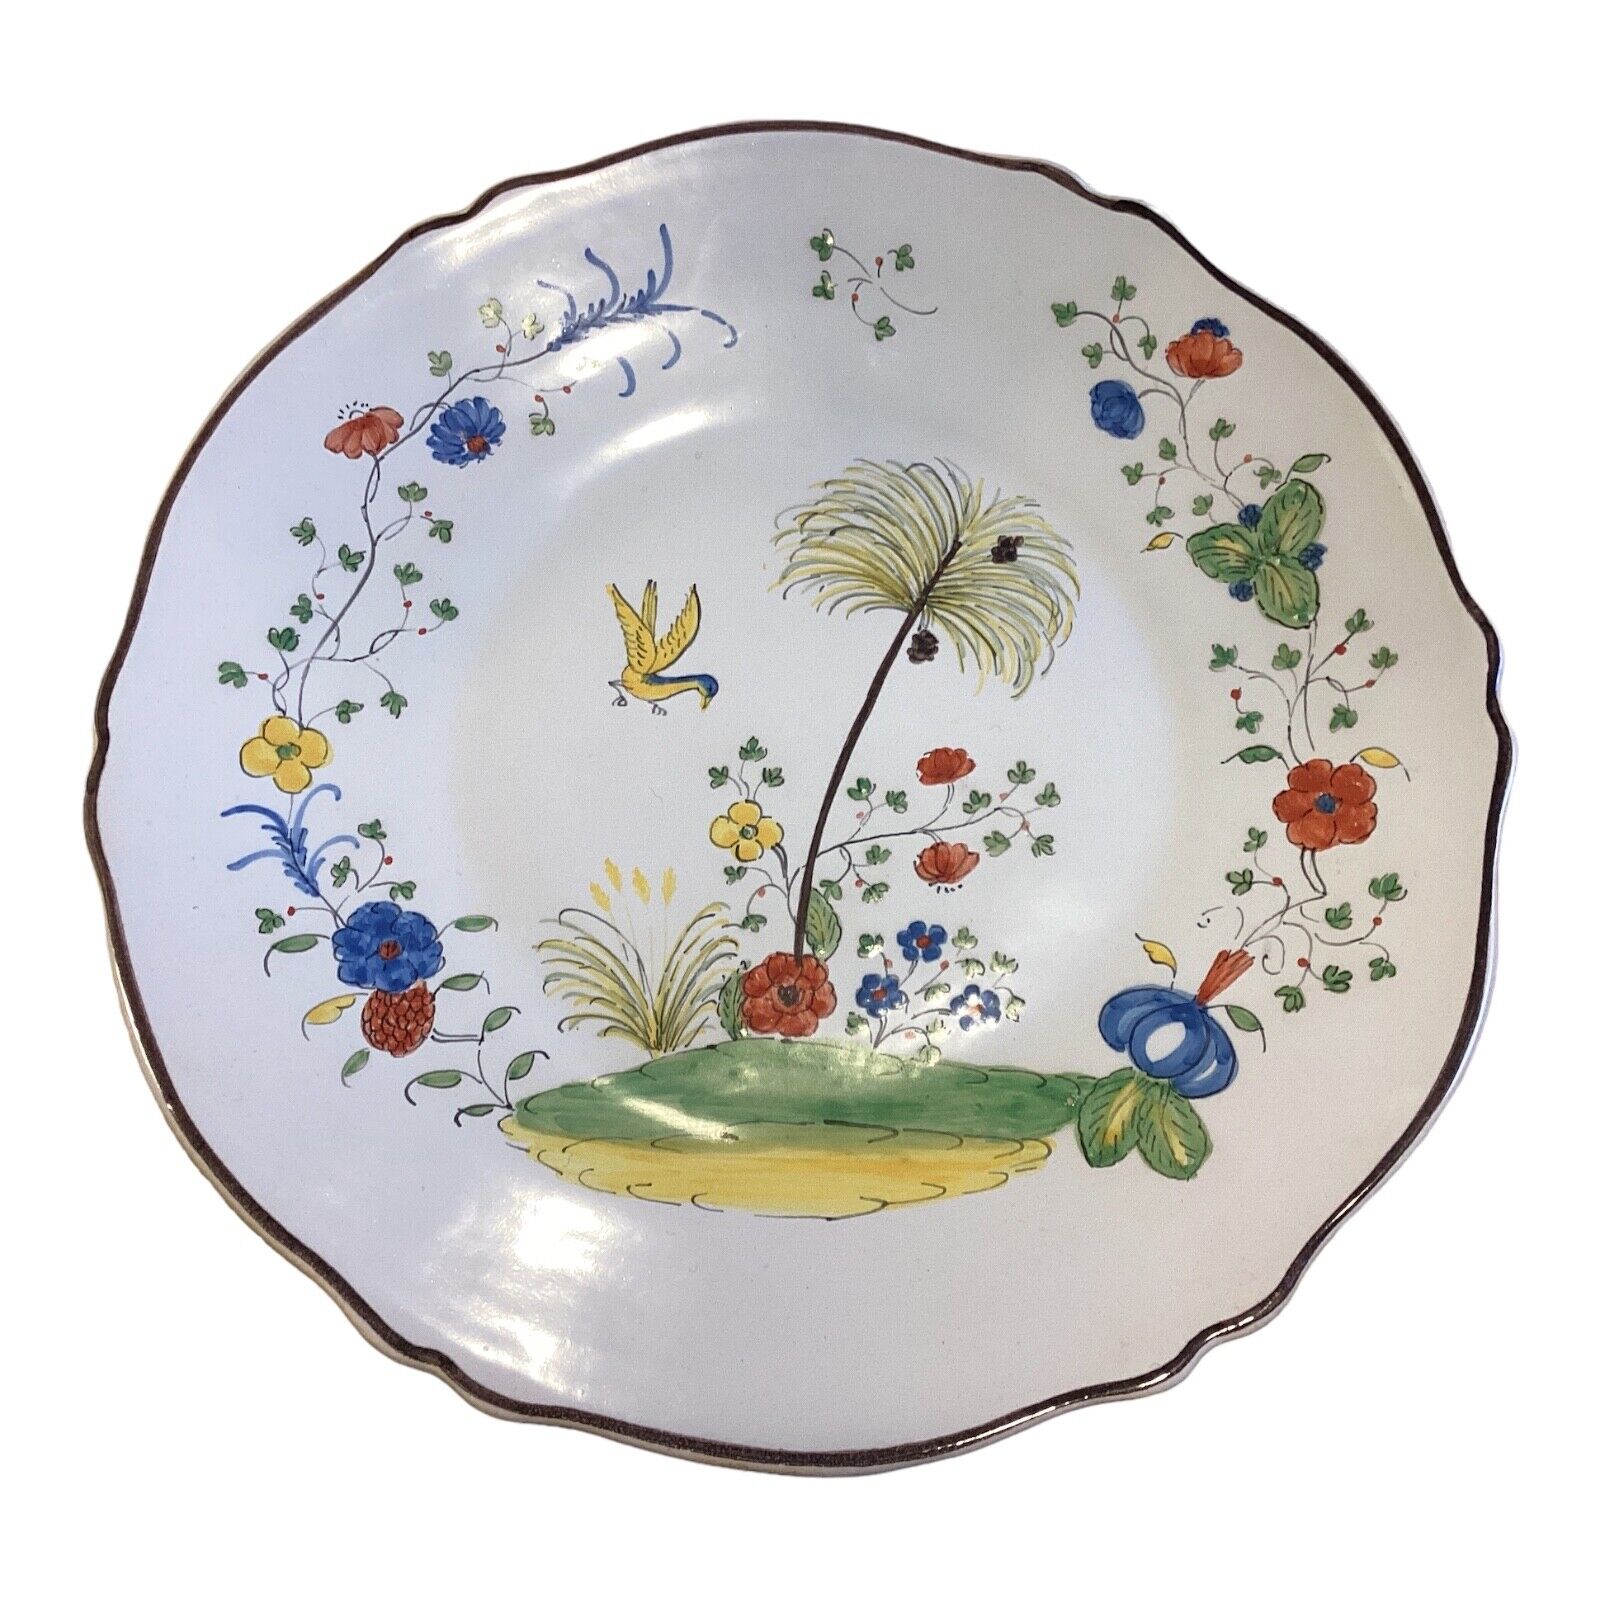 Faiencerie d'Art de Malicorne, French Provence Pottery - White Dinner Plate